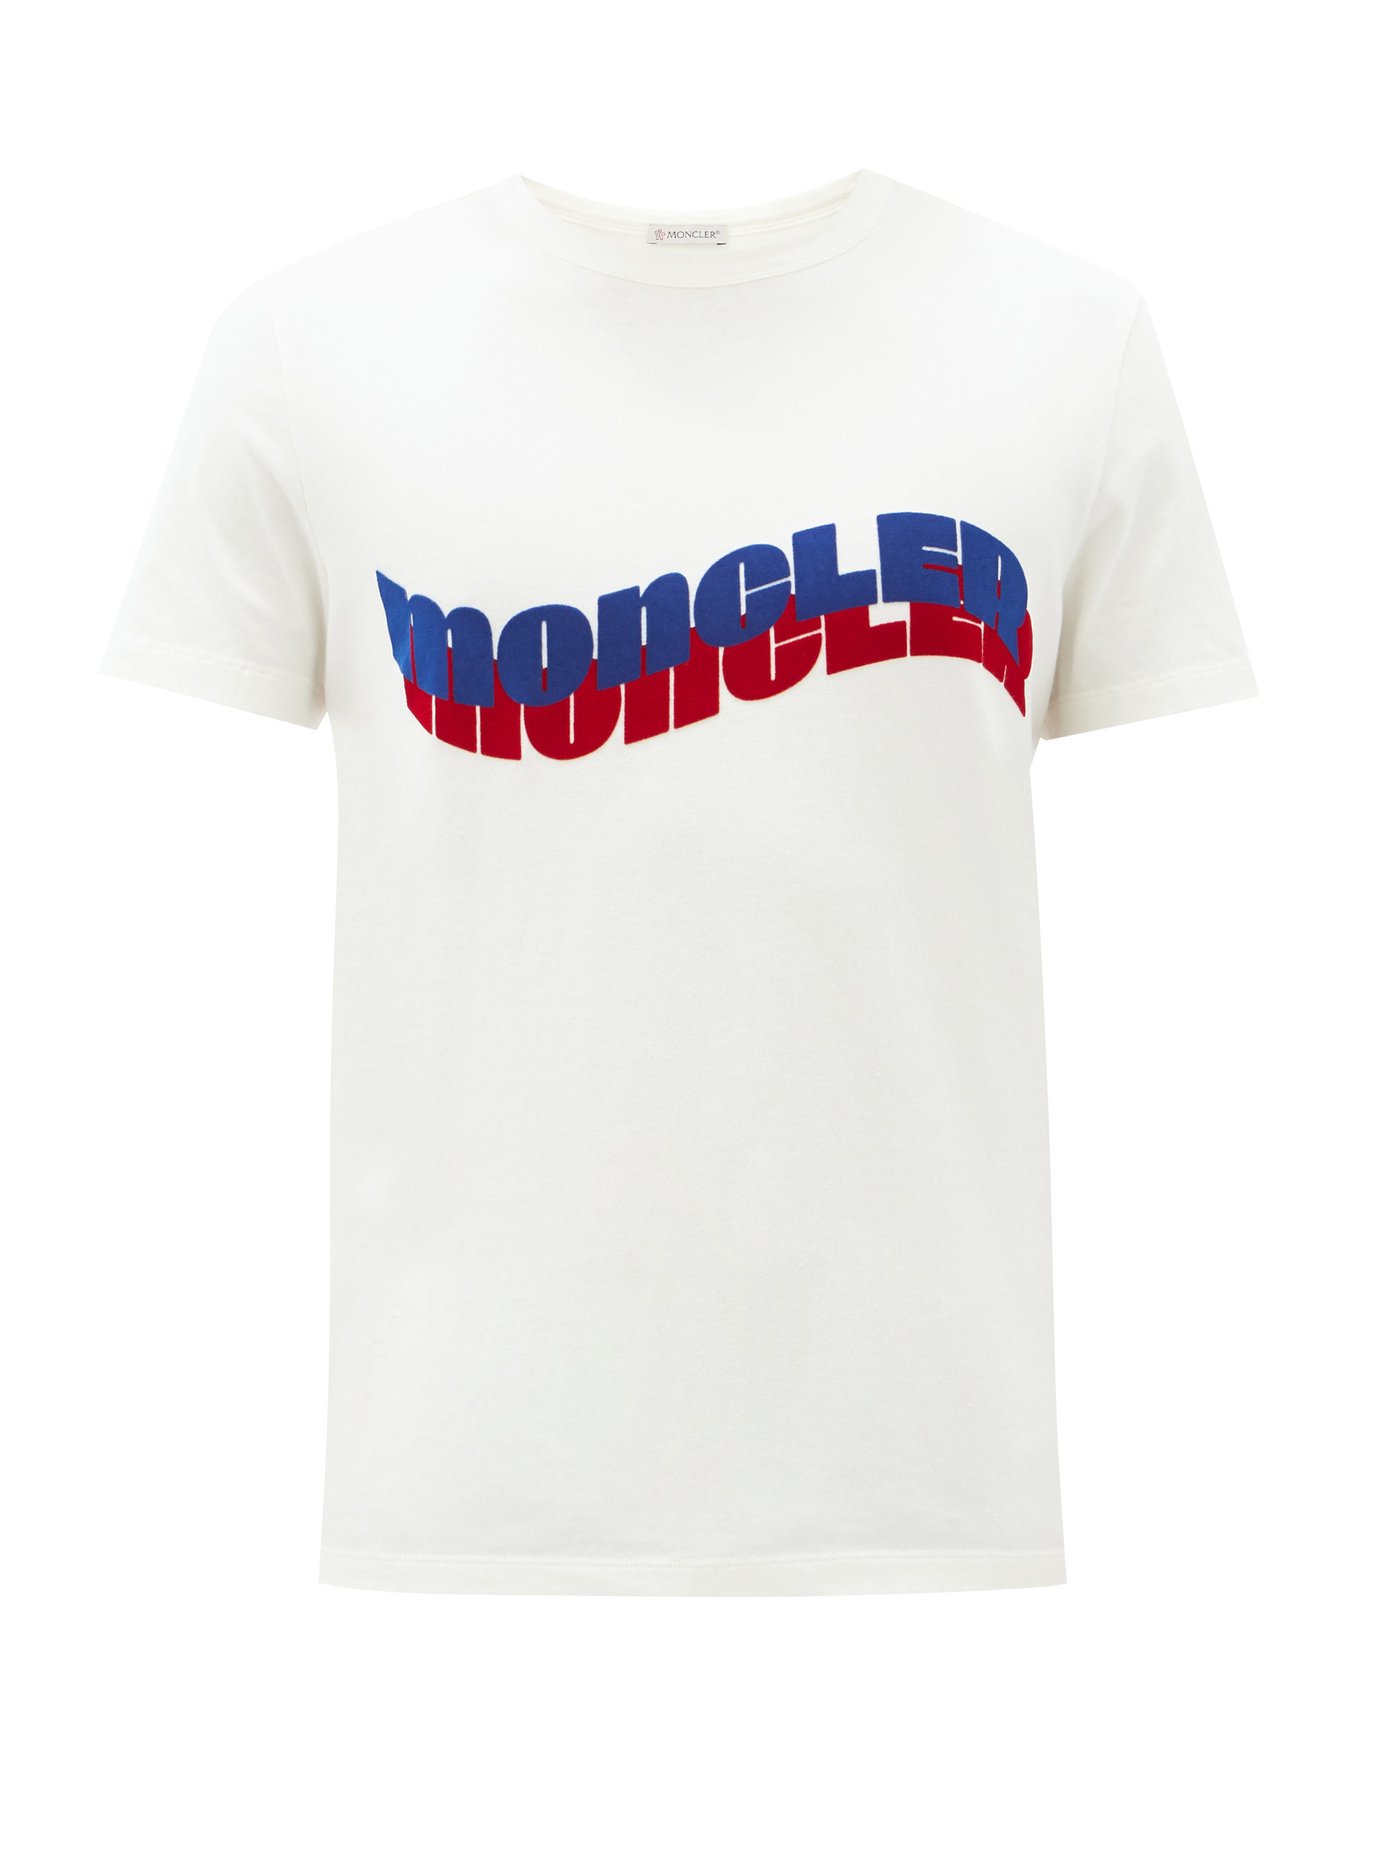 moncler logo t shirt